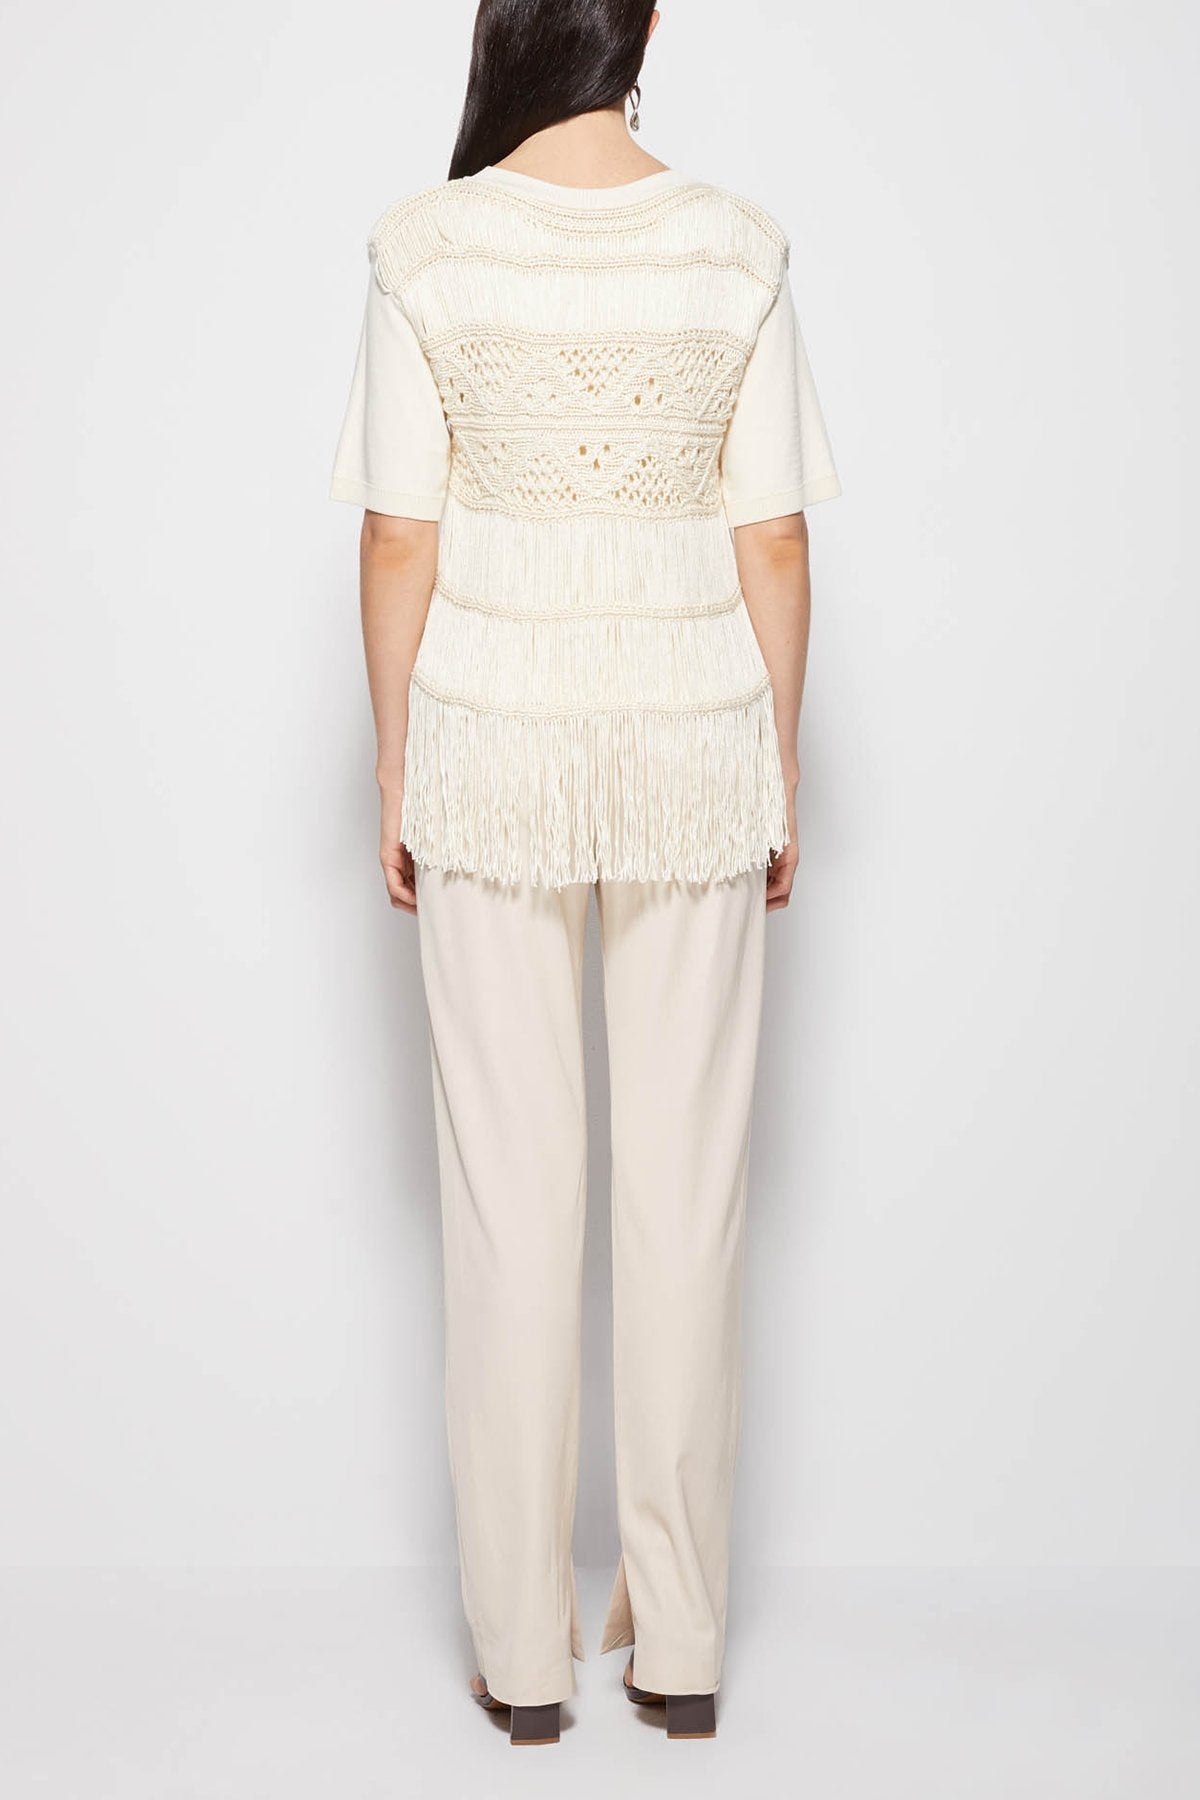 Delphine Macrame Short Sleeve Top in Ivory - shop-olivia.com